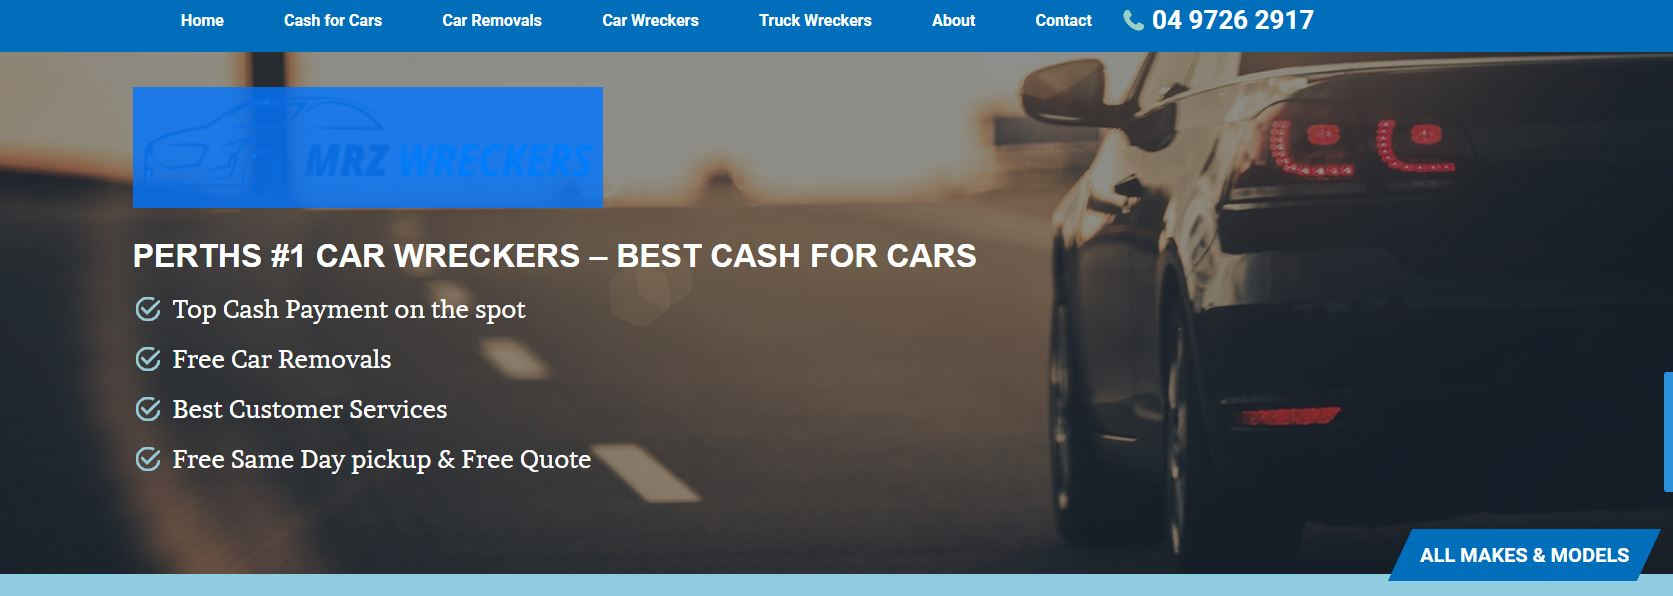 MRZ Car Wreckers Perth - Cash For Cars